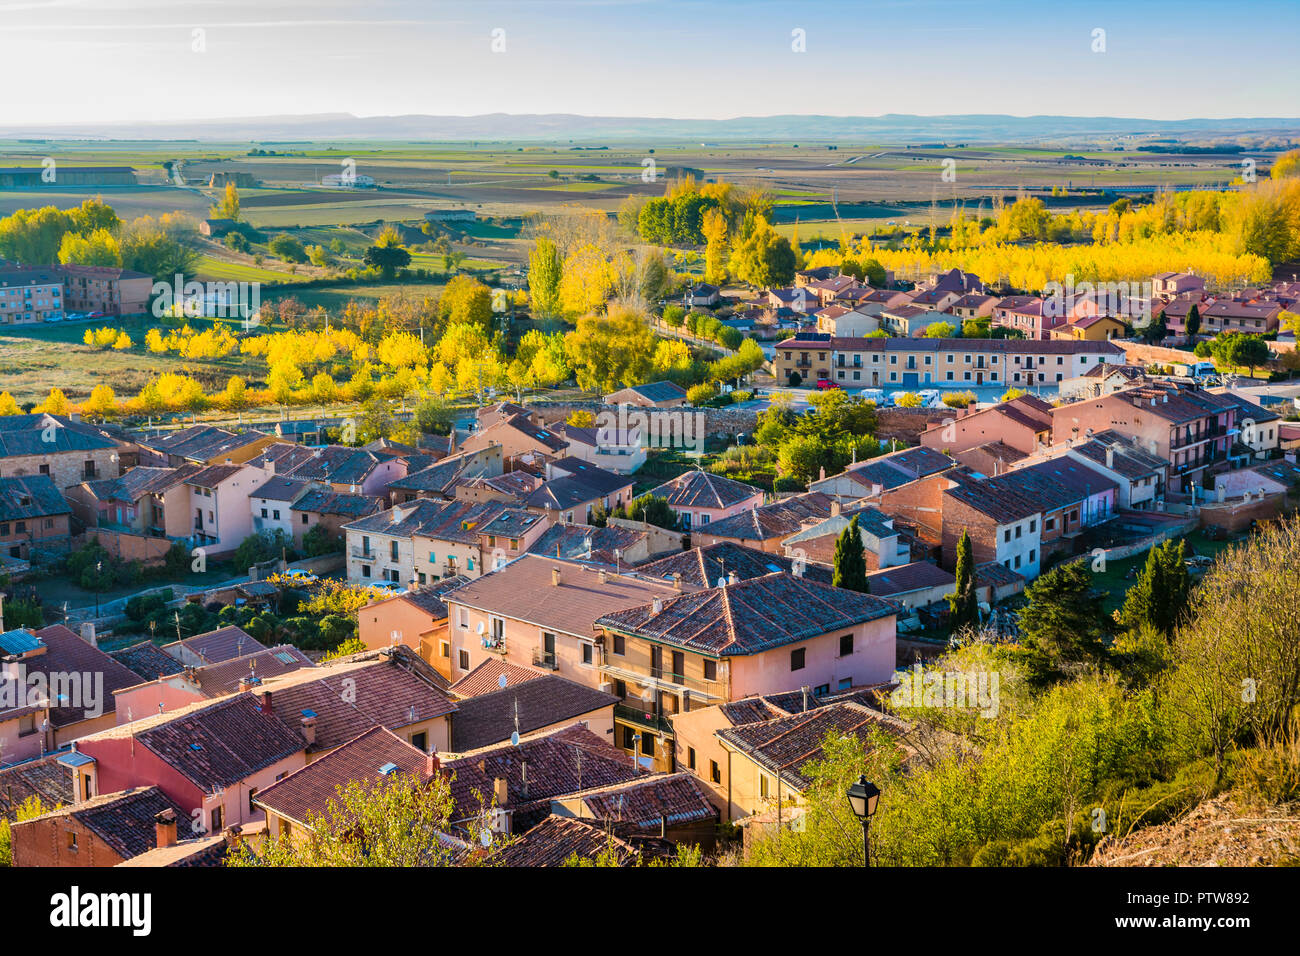 View of Ayllon. Ayllon, Segovia, Castilla y leon, Spain, Europe. Stock Photo